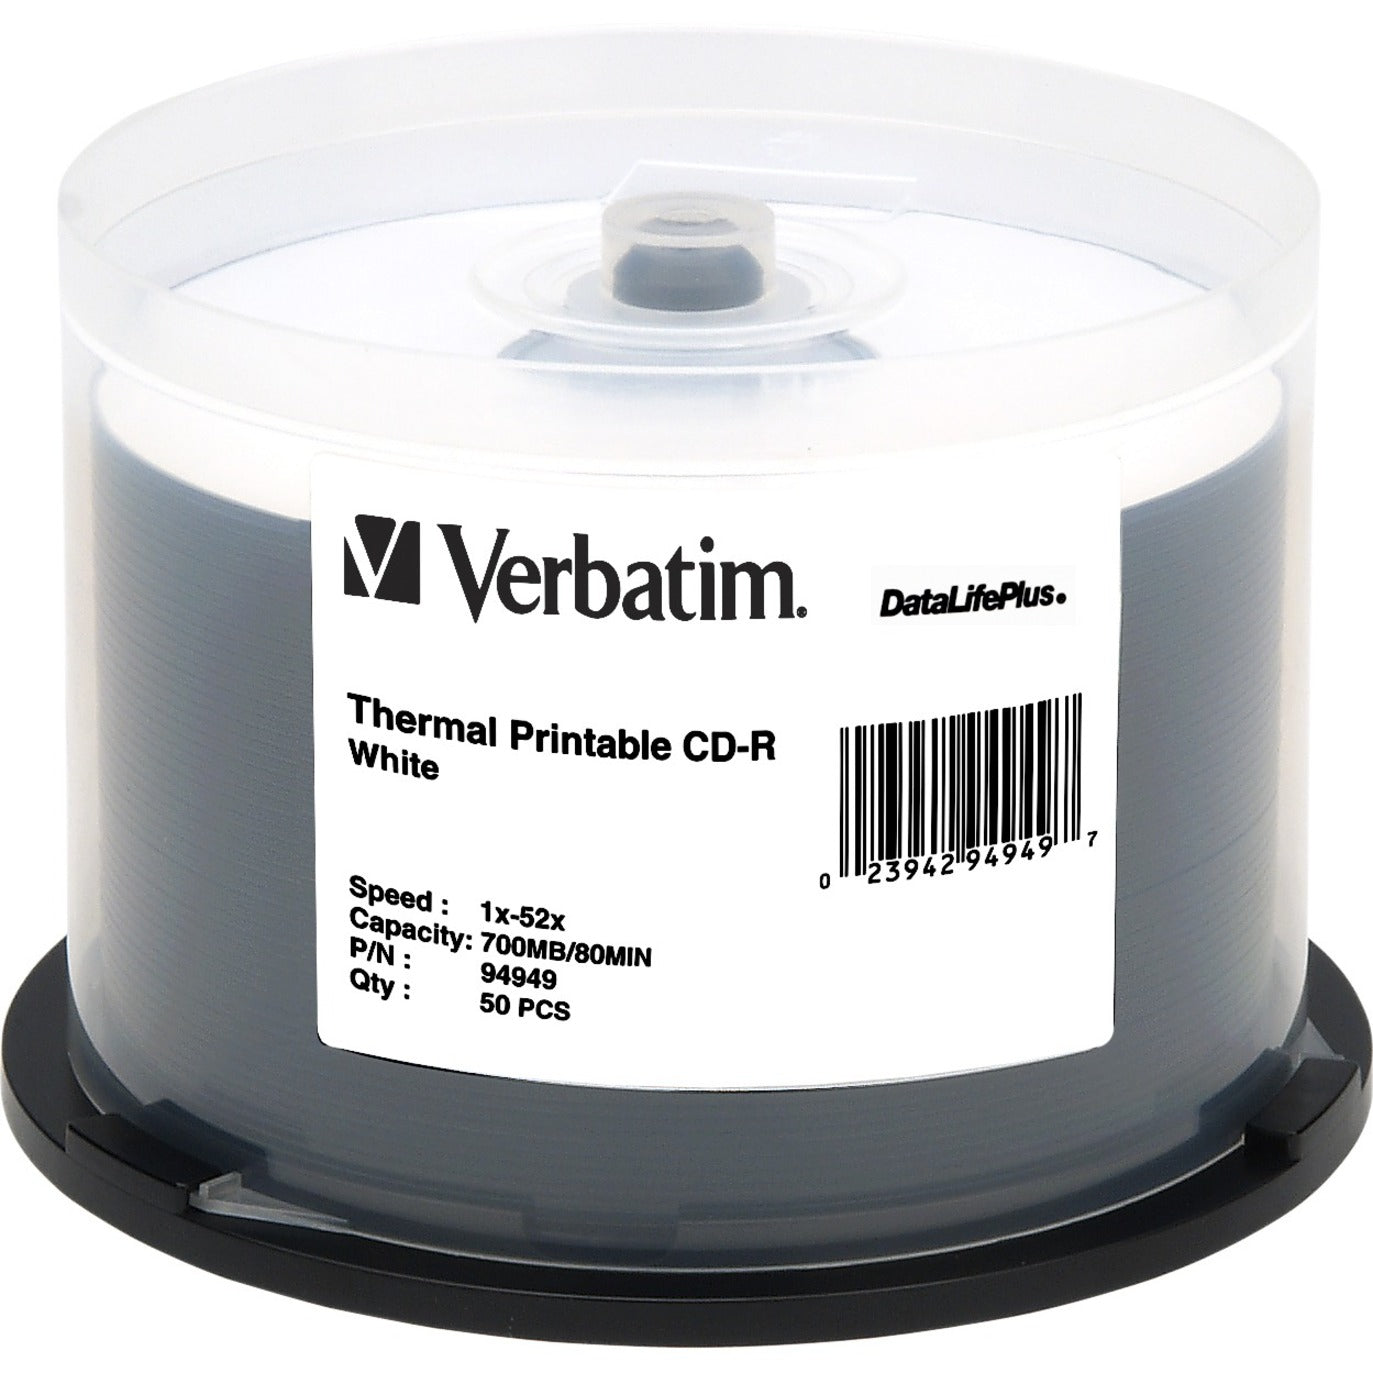 Verbatim 94949 CD-R 80MIN 700MB 52x DataLifePlus White Thermal Printable 50pk Spindle, Full-color, high resolution printing